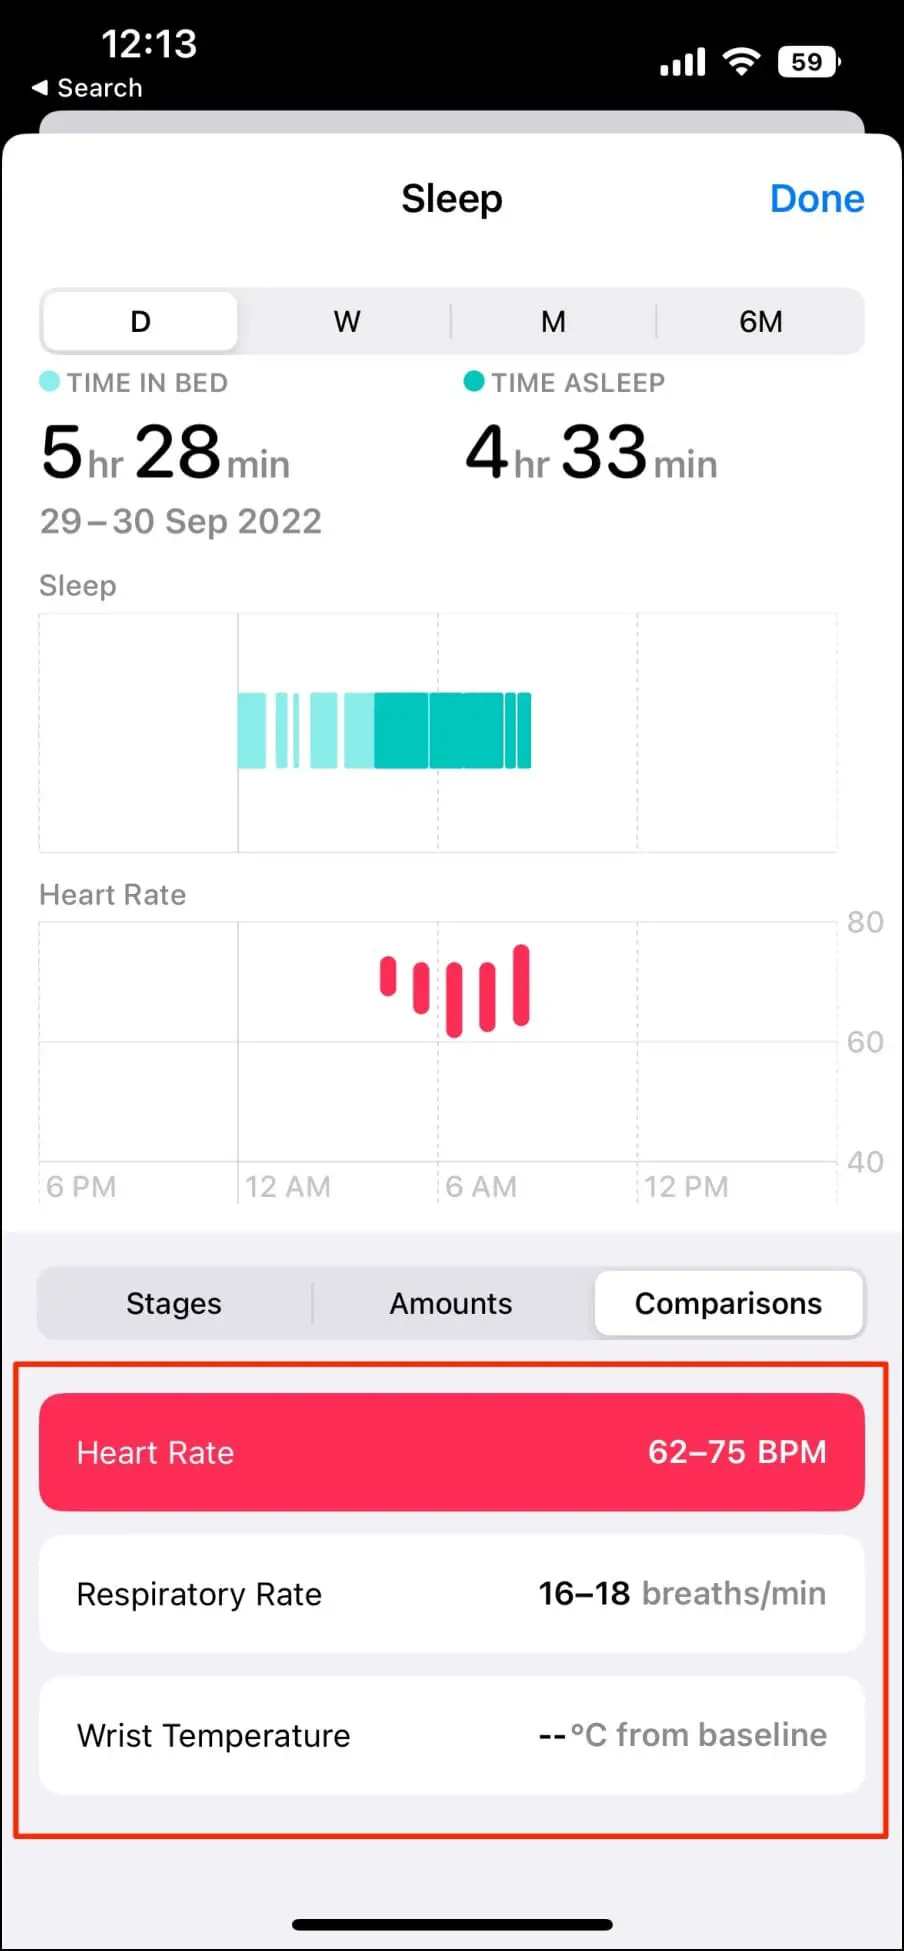 Sleep Stage Tracking on Apple Watch